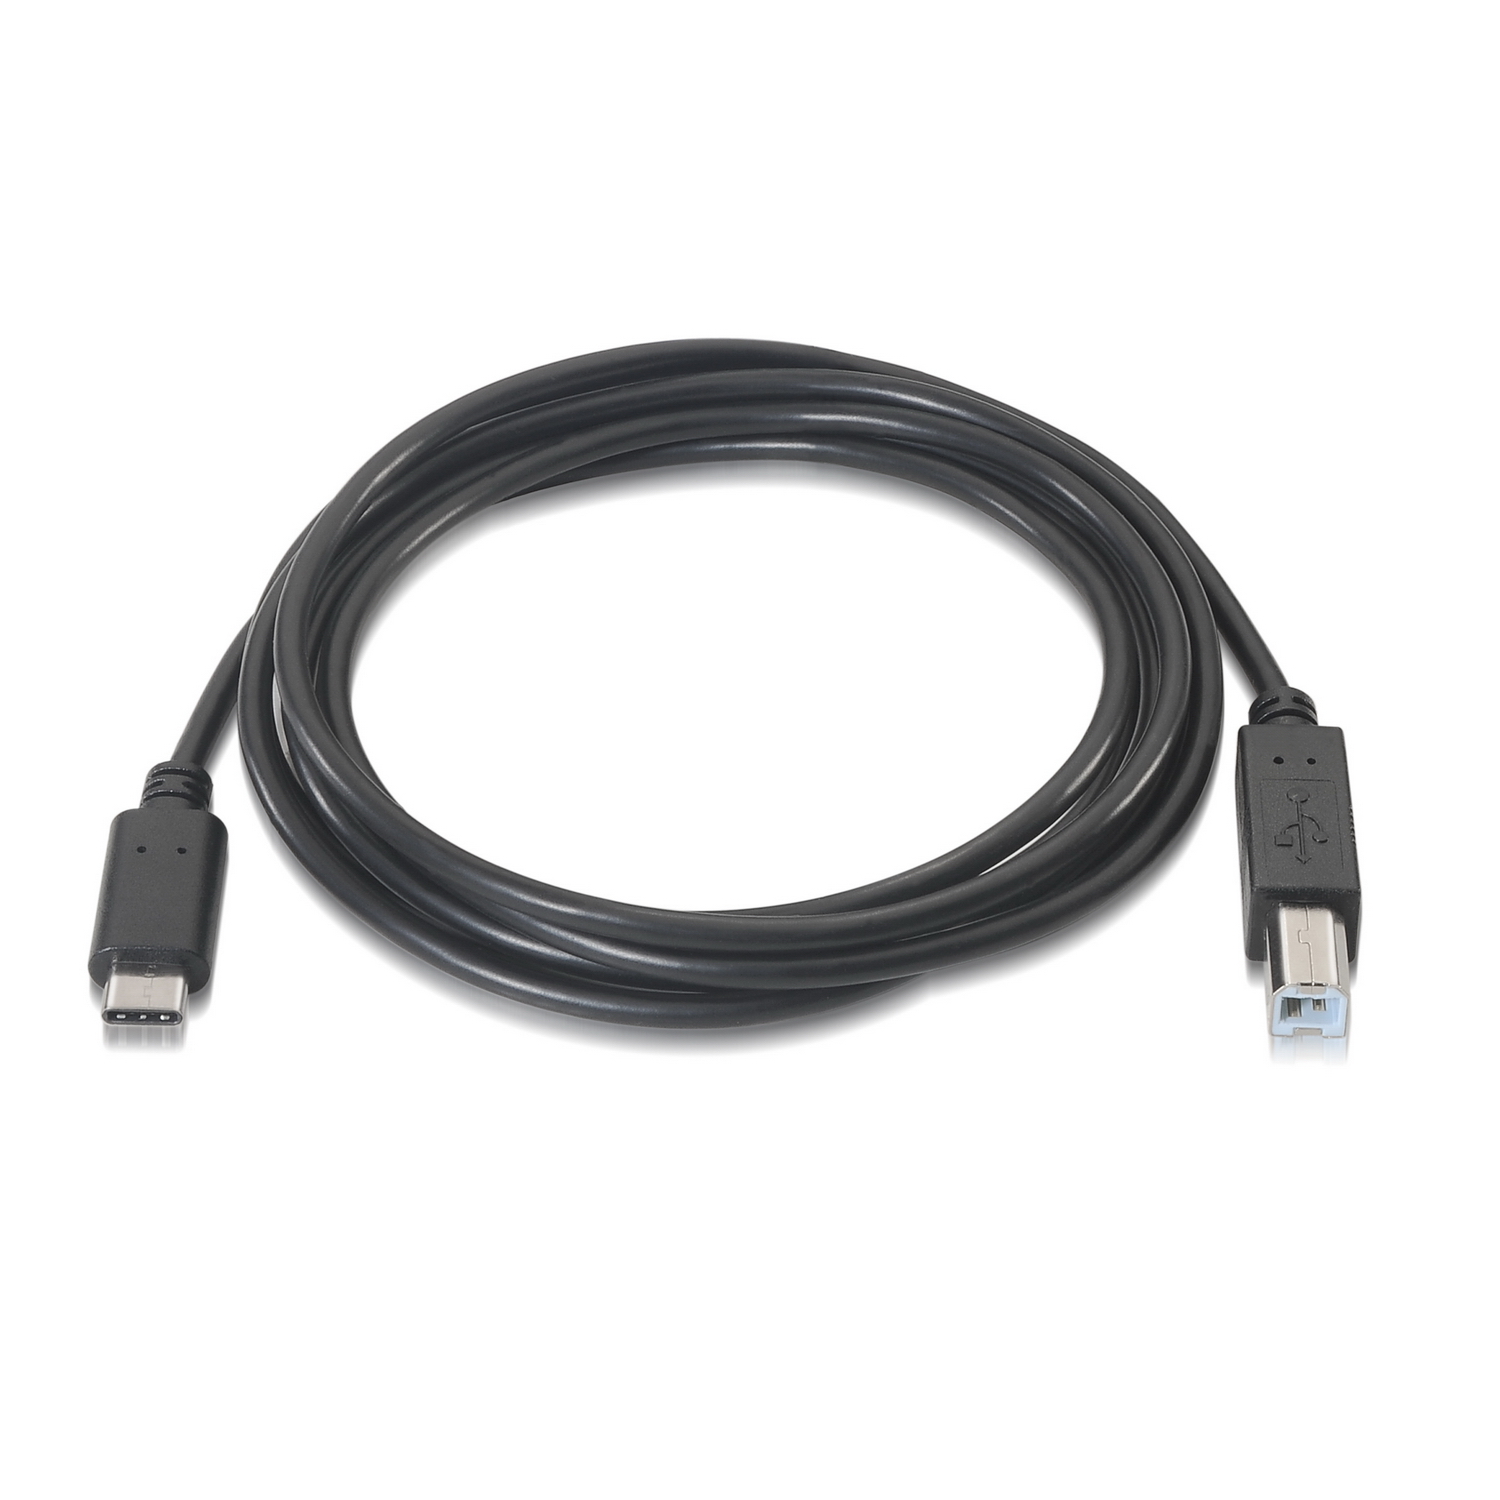 Cable USB 2.0 impresora, tipo A Macho a tipo B Macho, 1.0 metros. - AISENS®